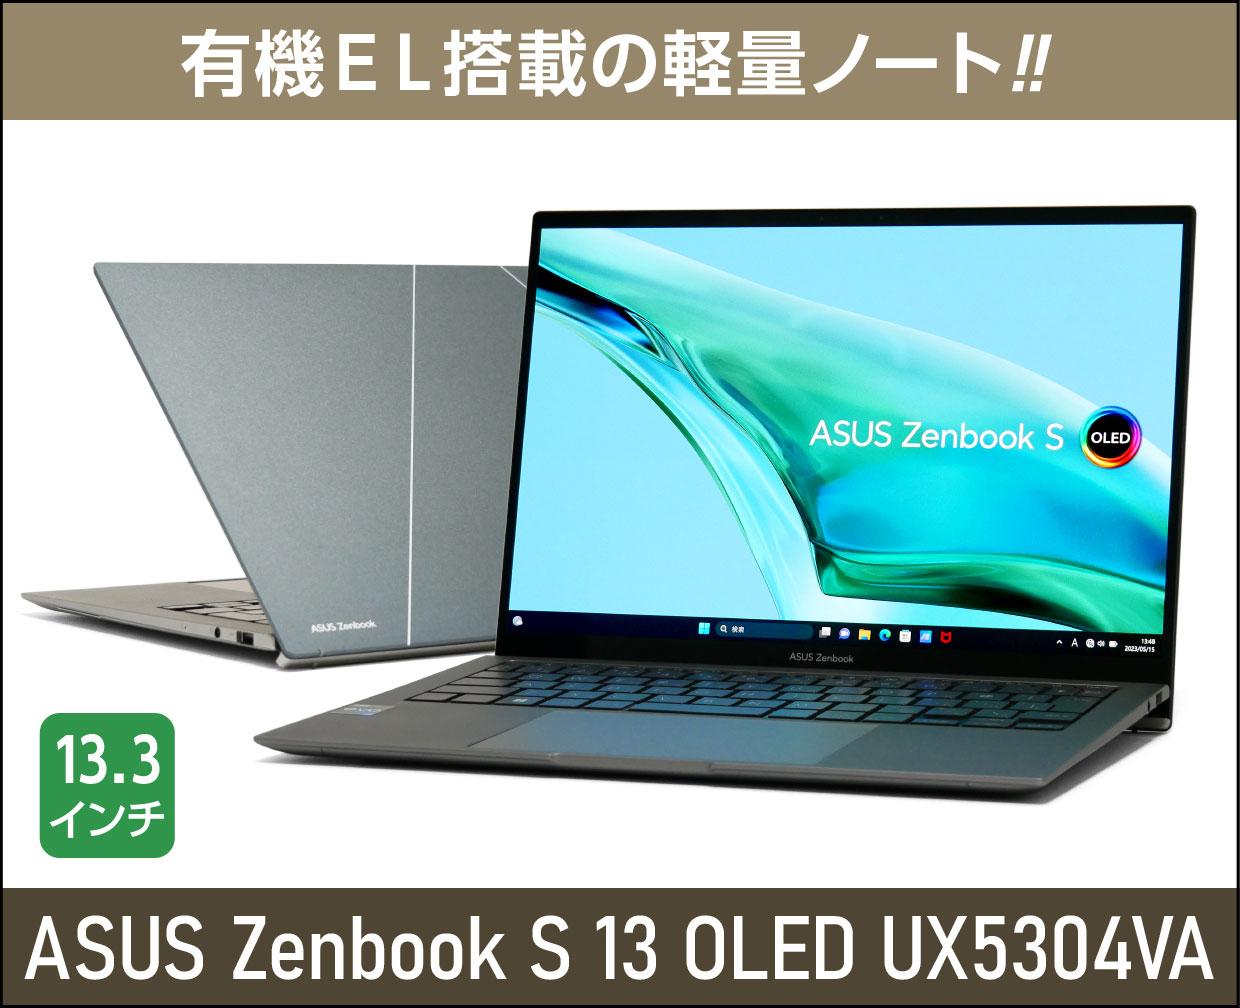 ASUS Zenbook S 13 OLED UX5304VAのメイン画像